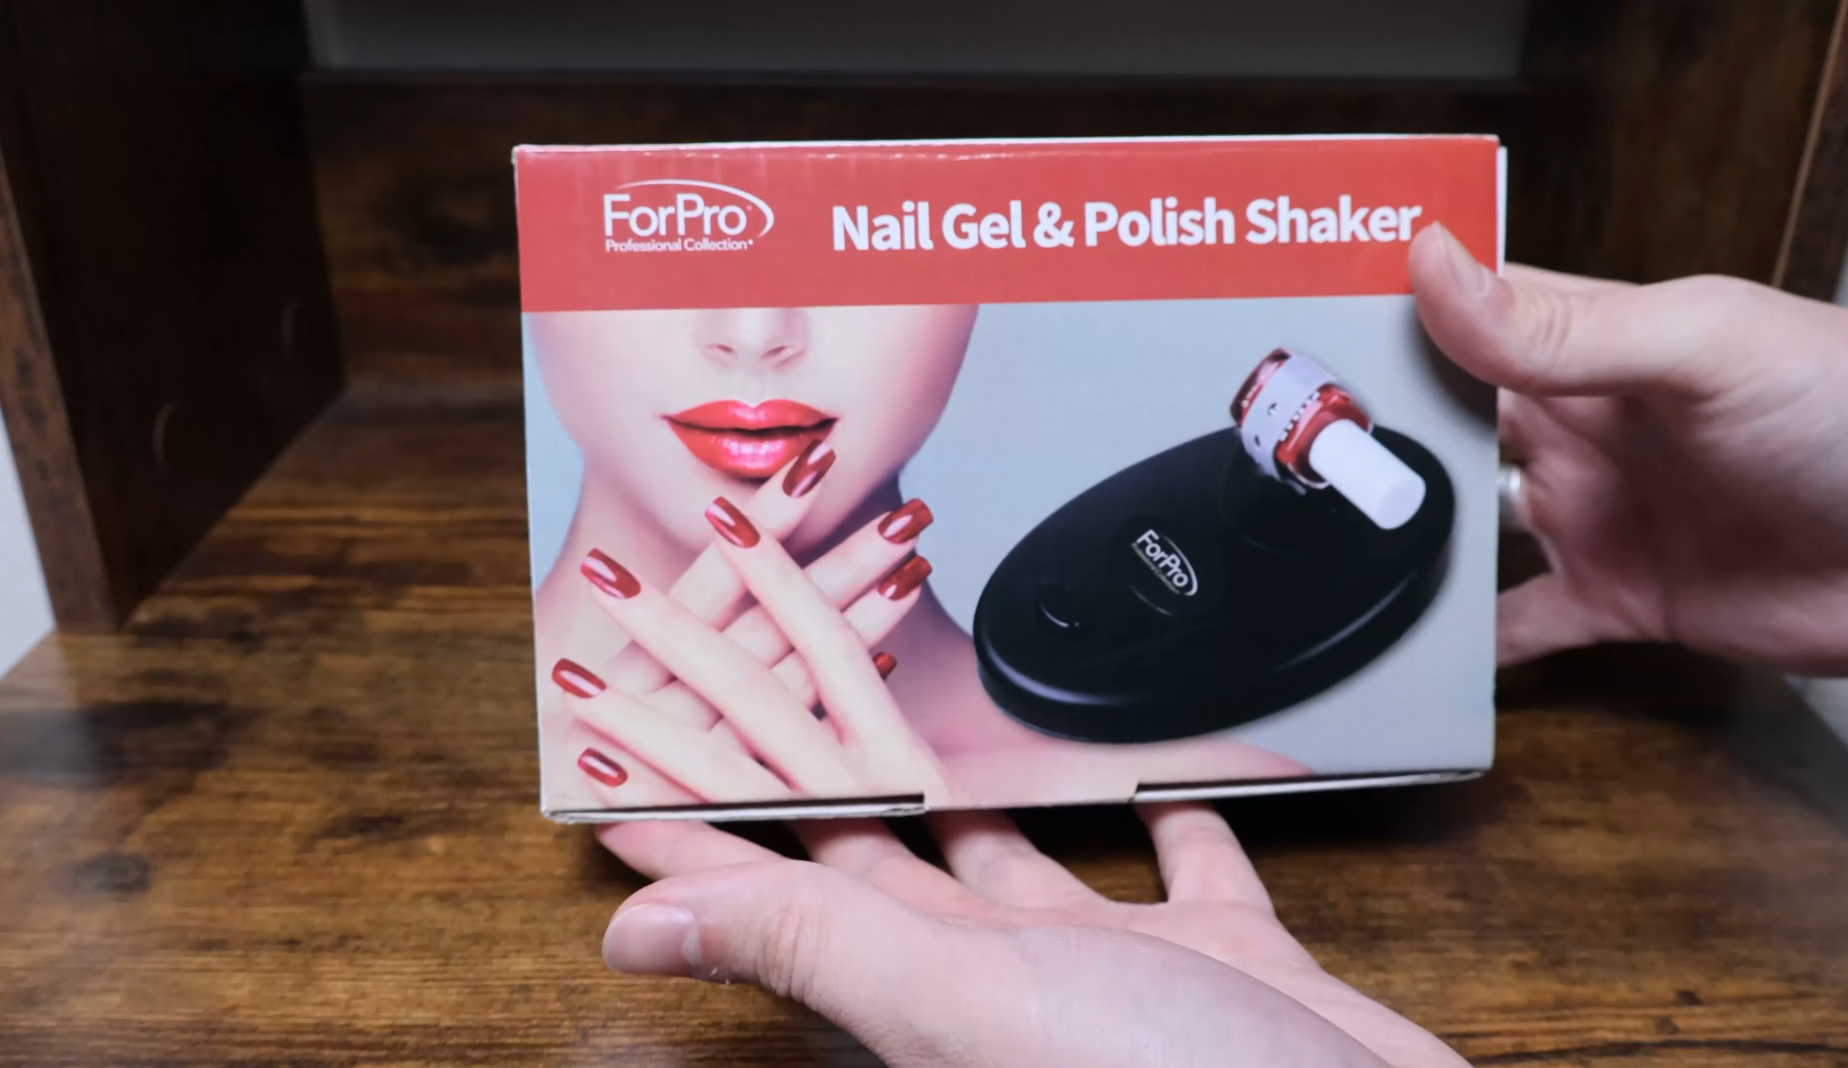 The beautiful box of the ForPro Miniature Paint Shaker